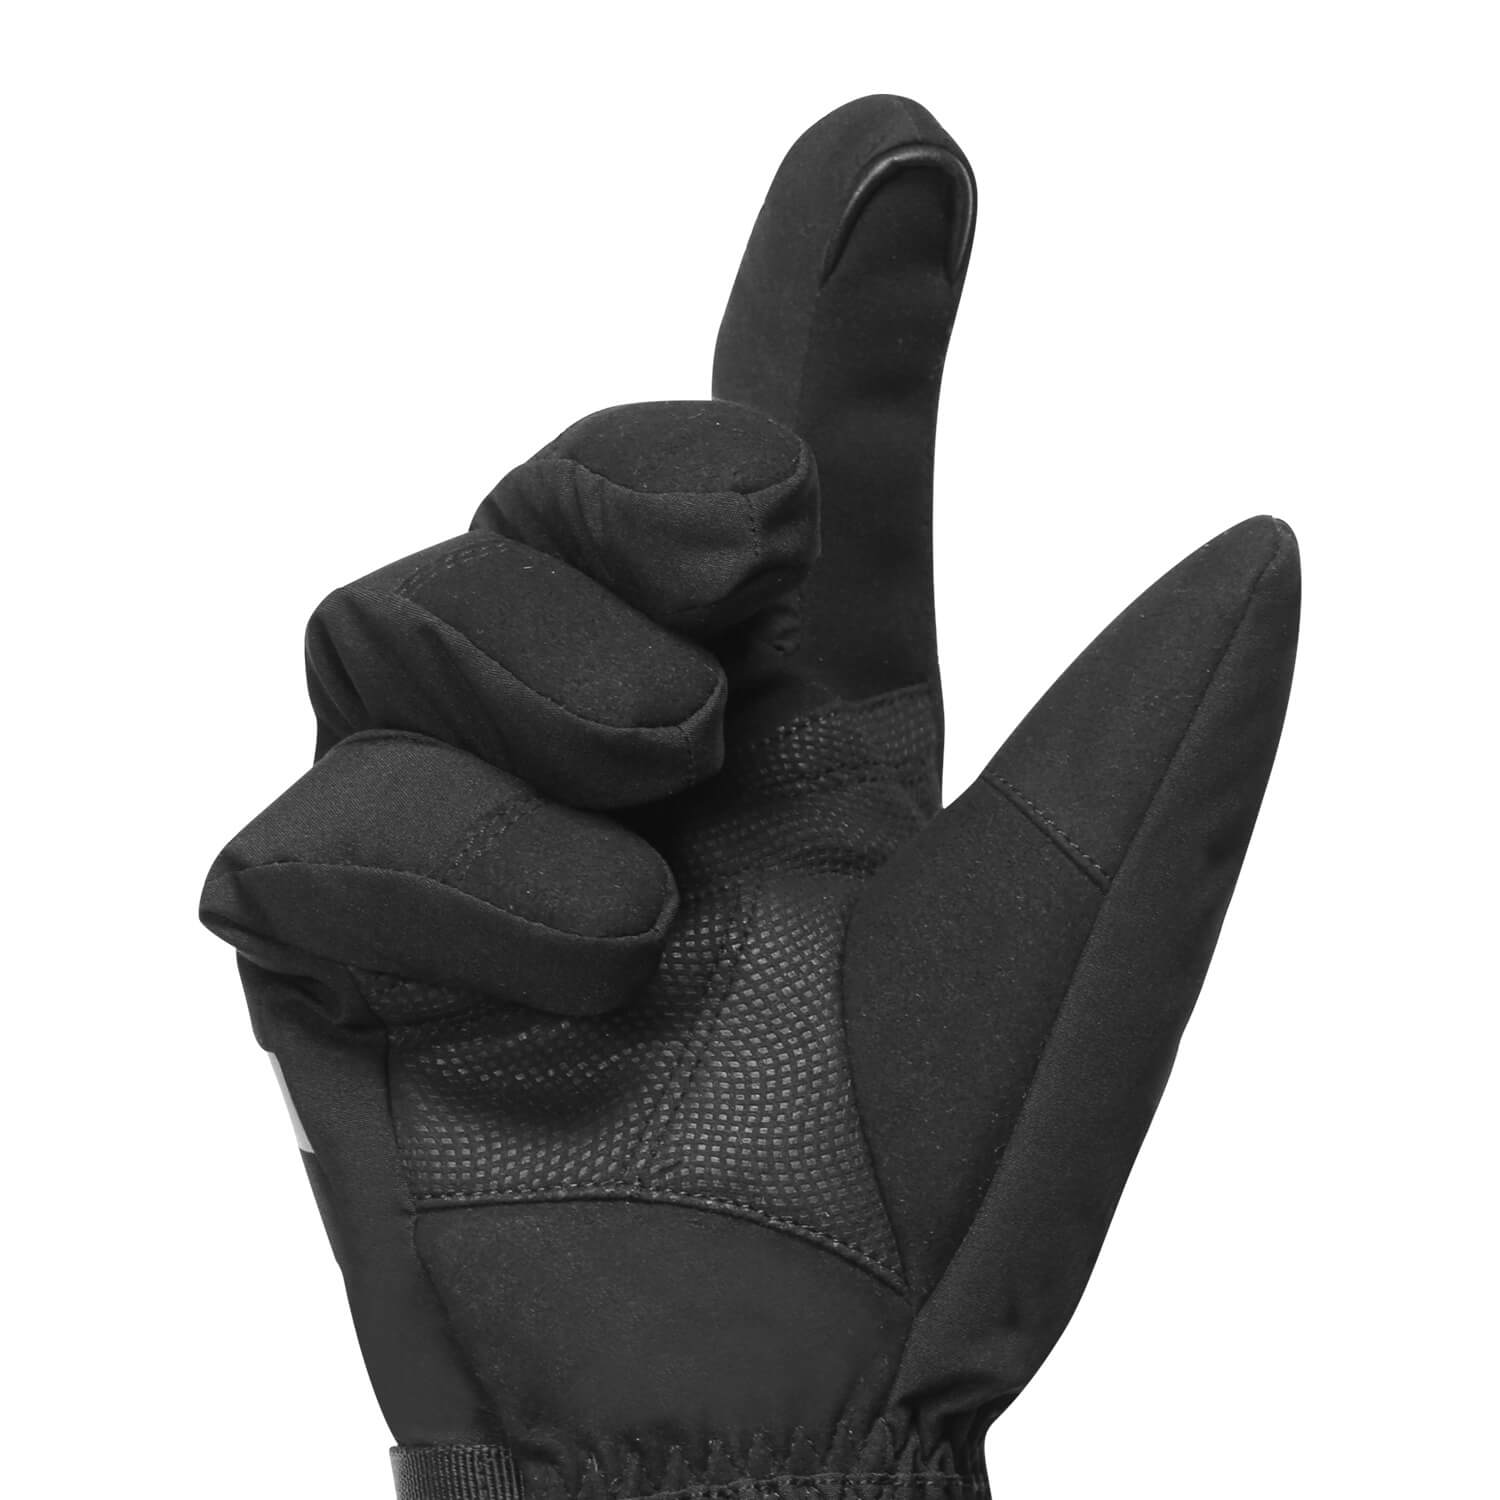 Savior Heated Anti-slip Gloves